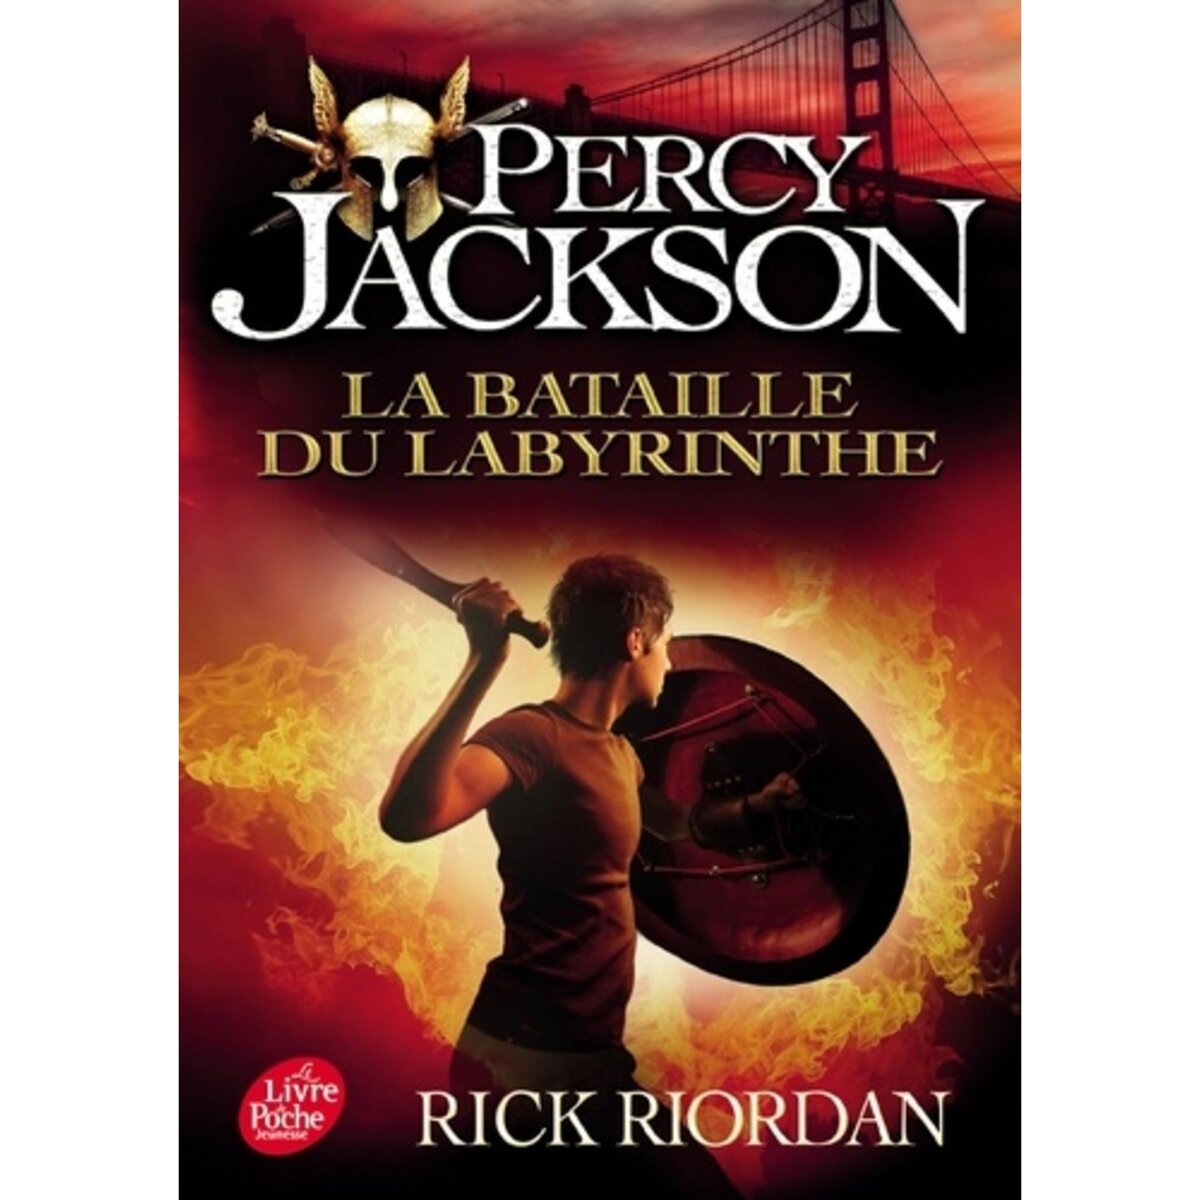  PERCY JACKSON TOME 4 : LA BATAILLE DU LABYRINTHE, Riordan Rick